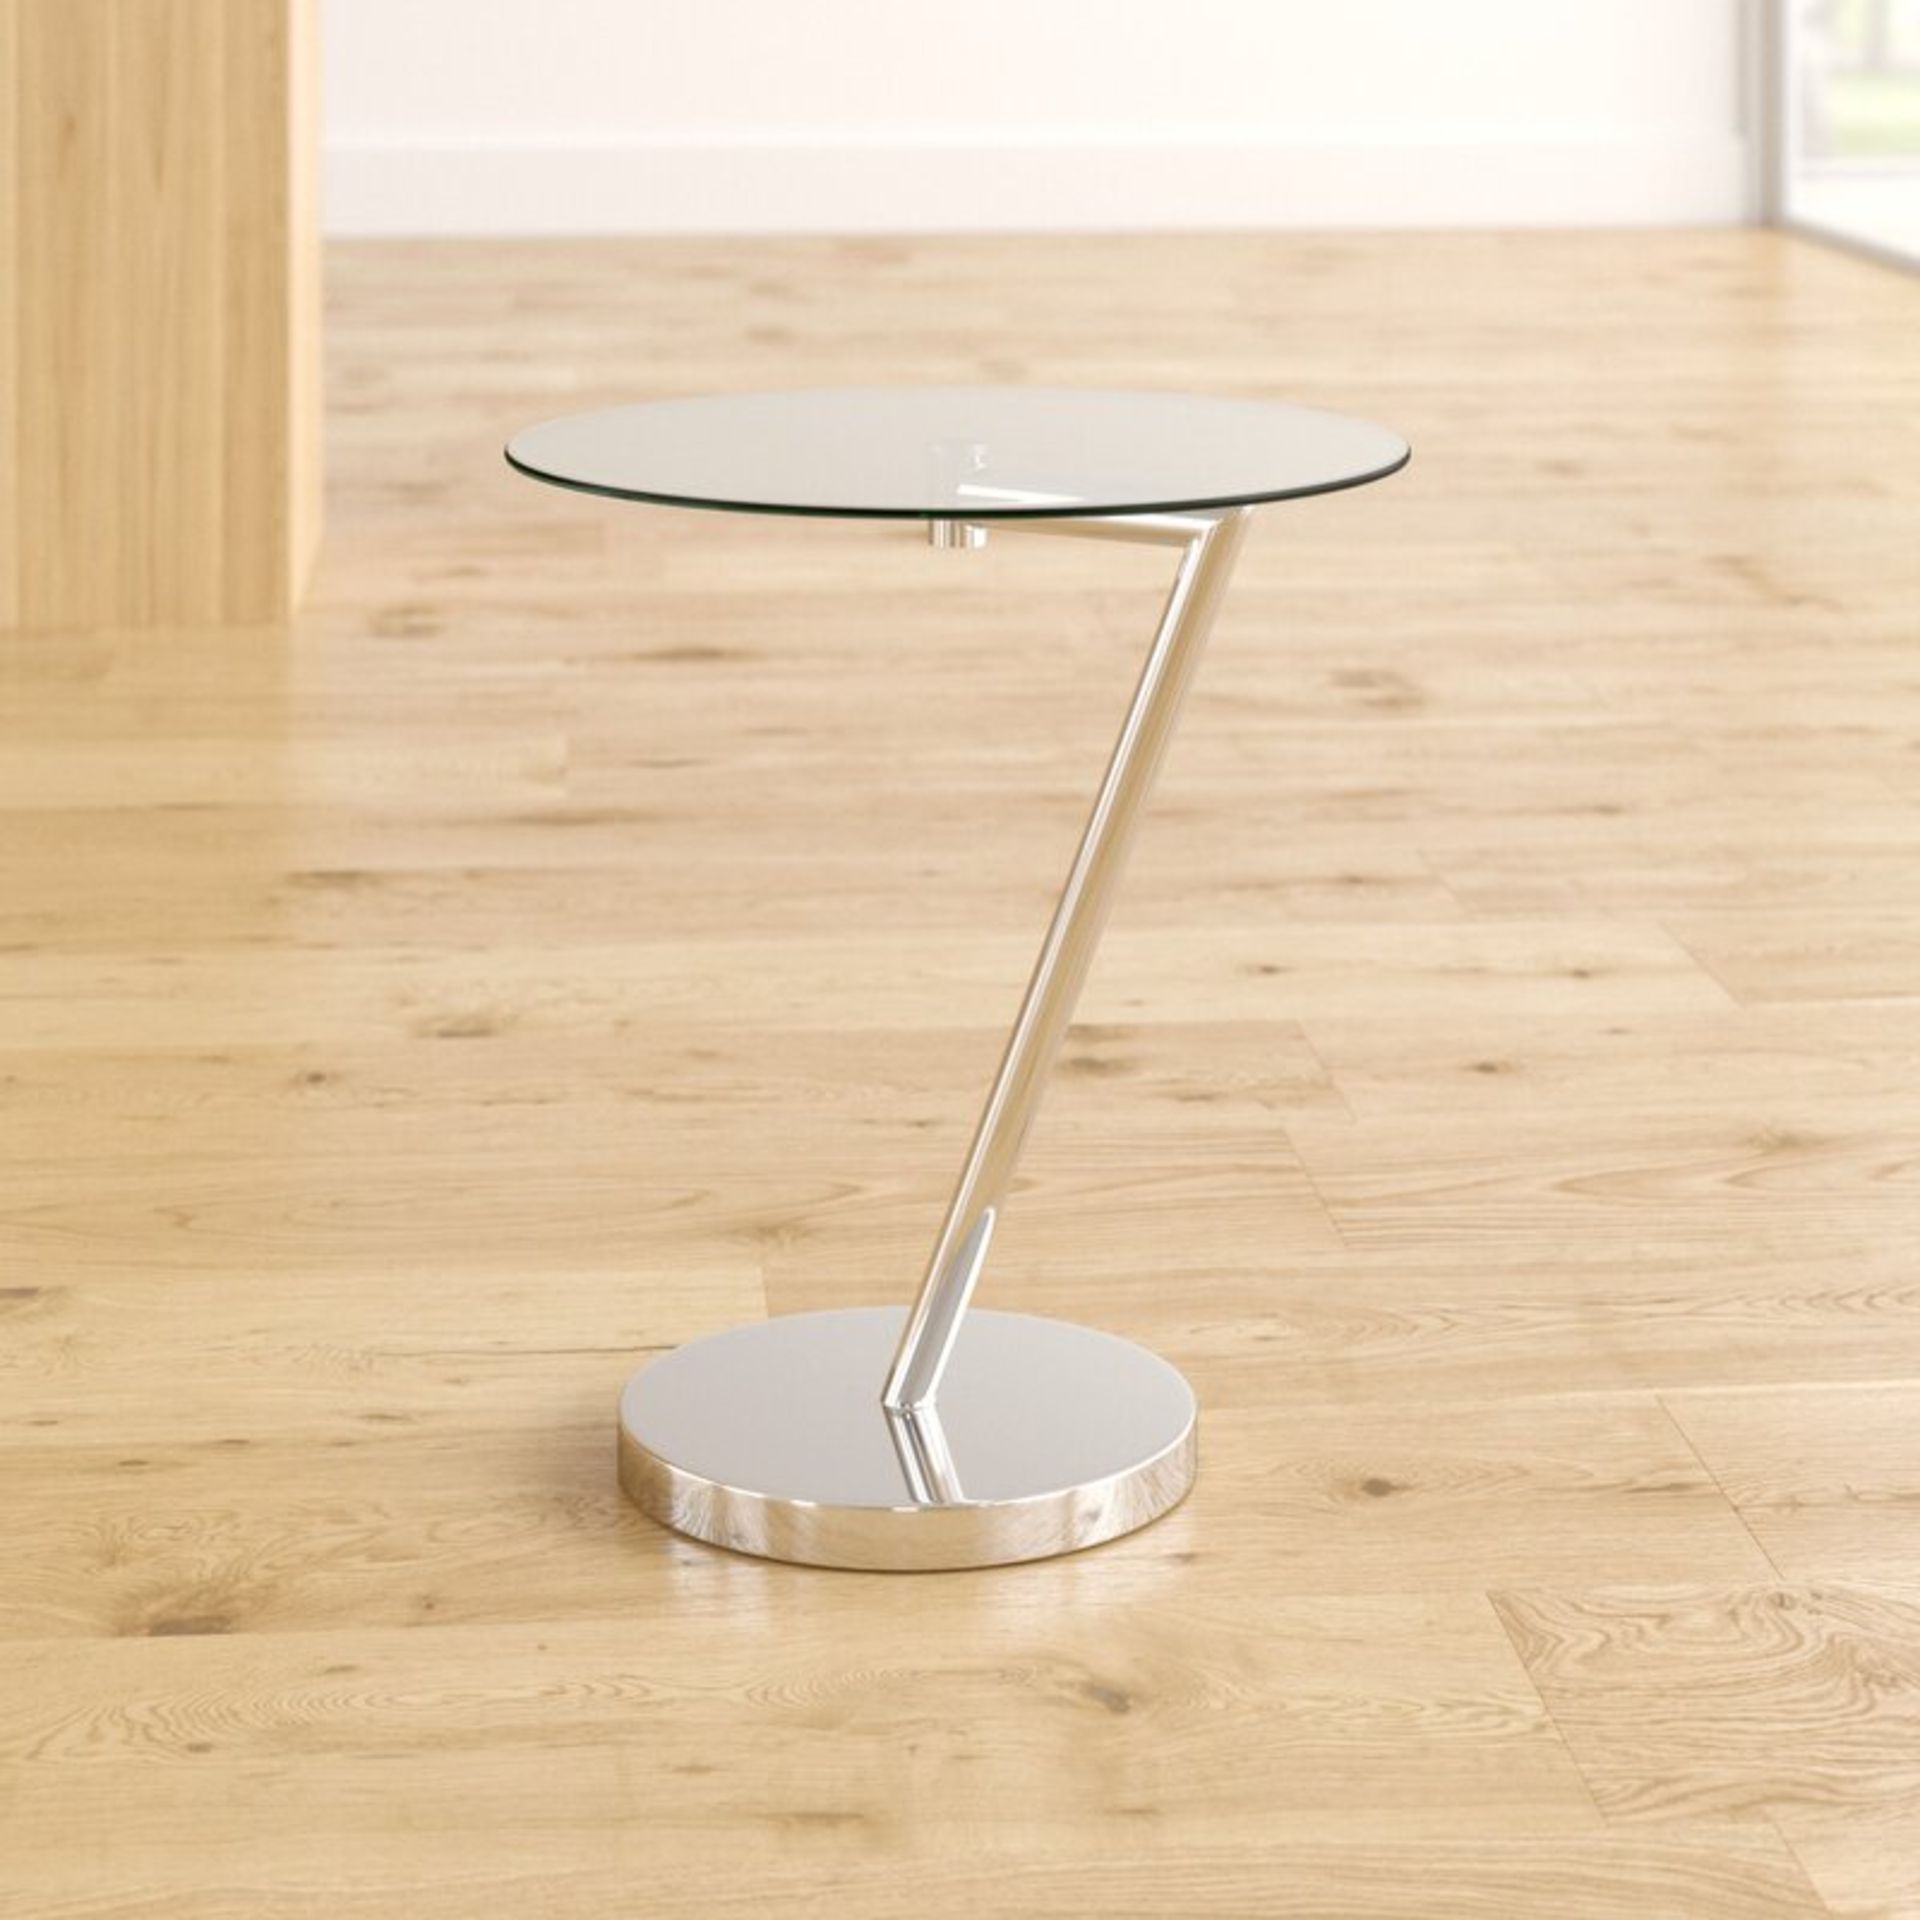 Effie Side Table - RRP £76.99. - Image 2 of 3